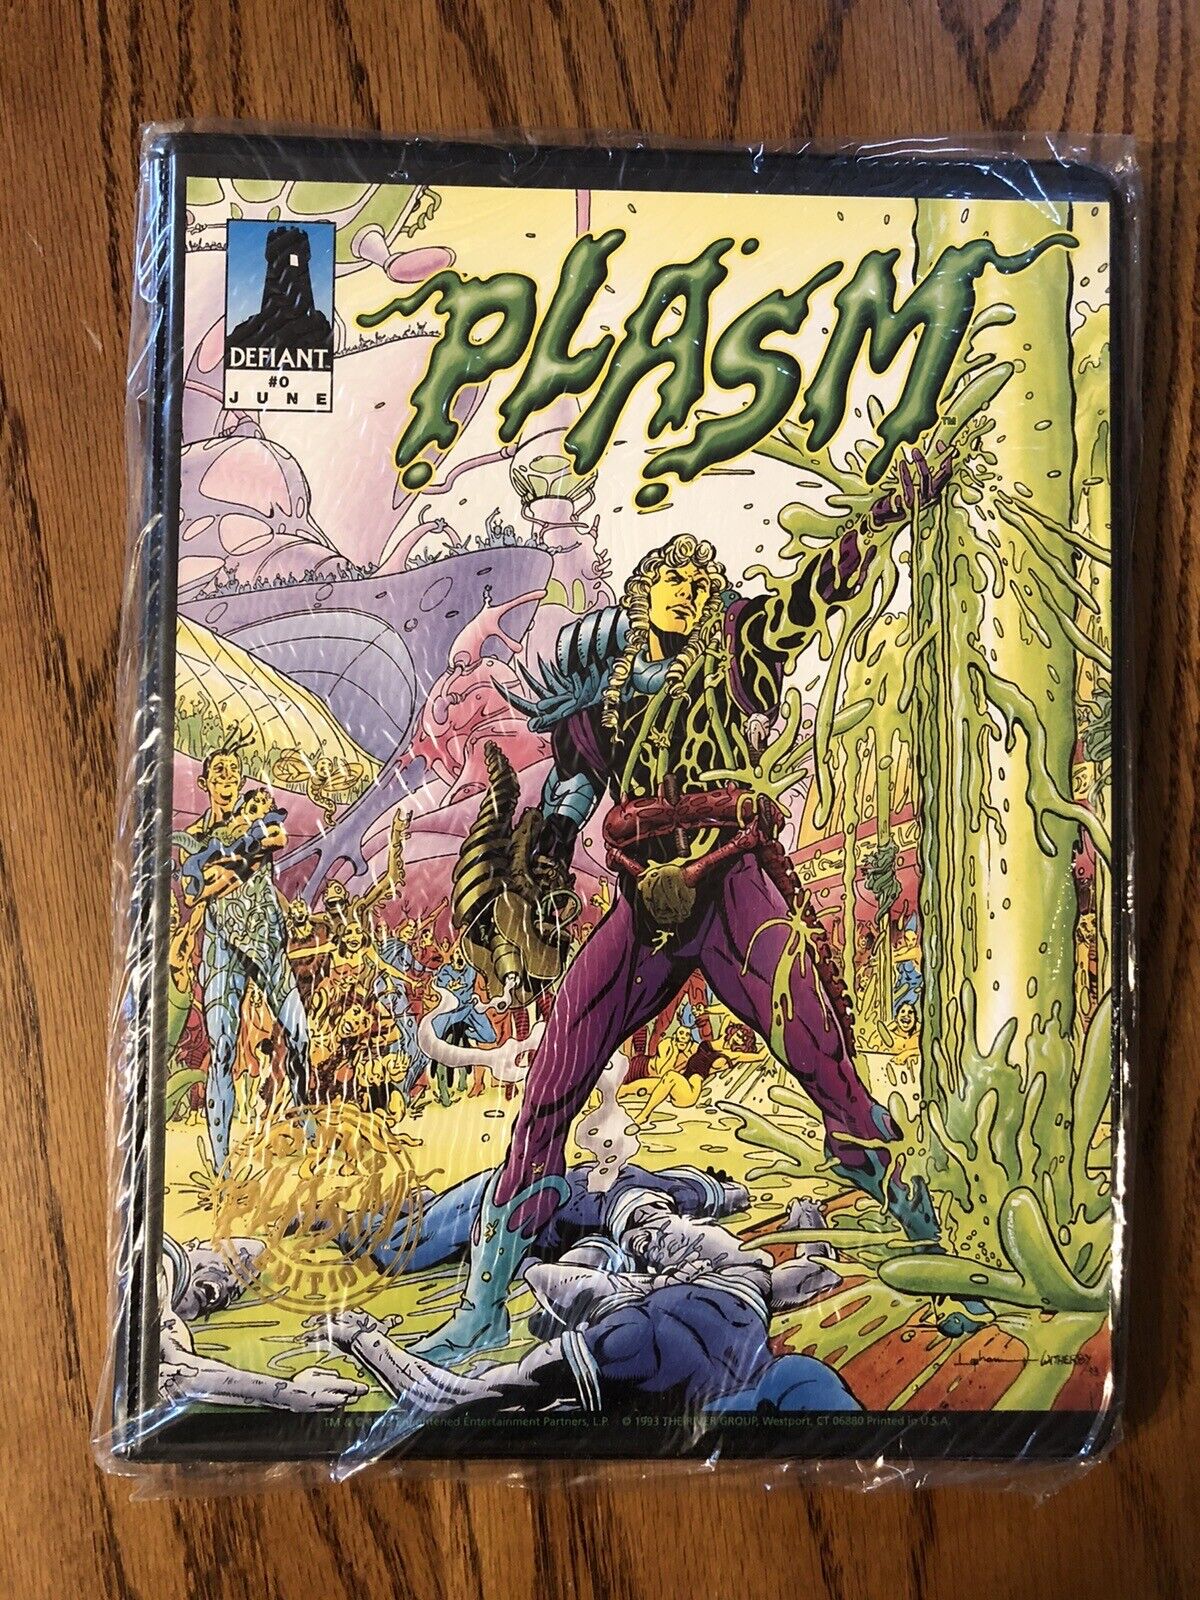 Plasm #0 Trading Card Binder - Defiant Comics COMPLETE TRADING CARD SET - NEW